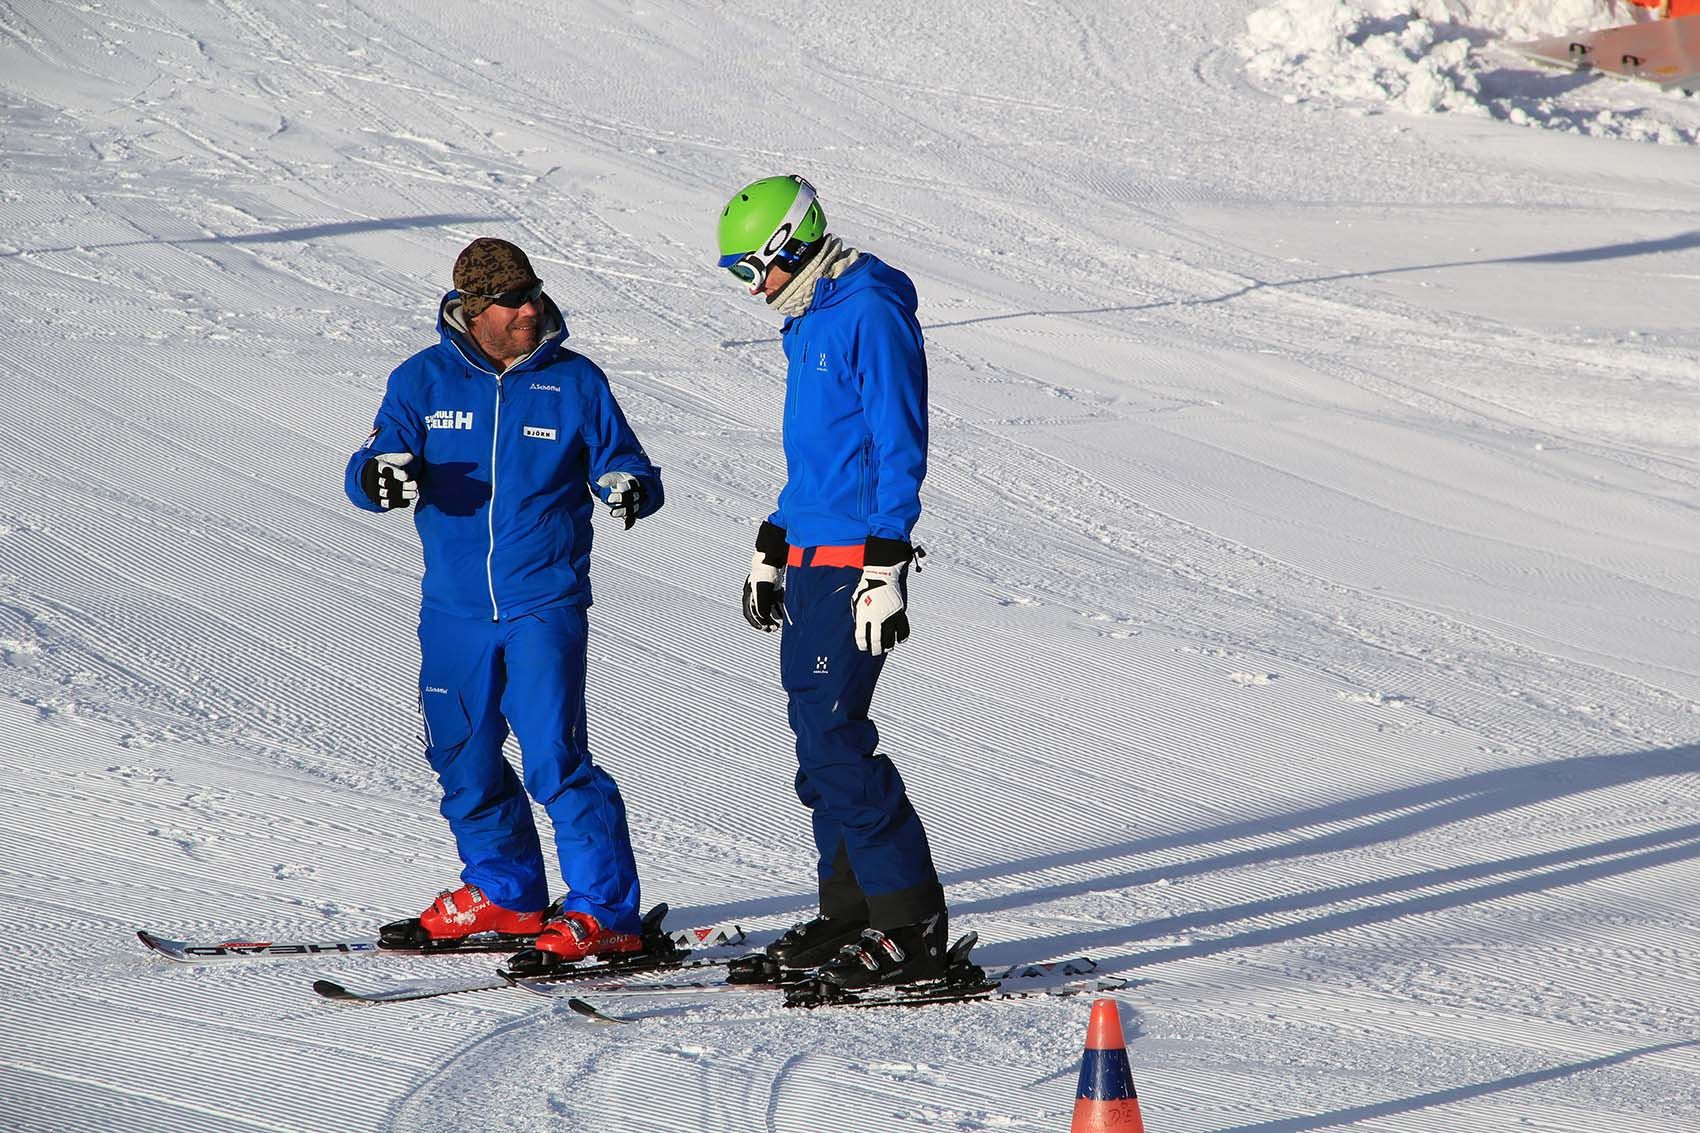 talking about the Ski technique